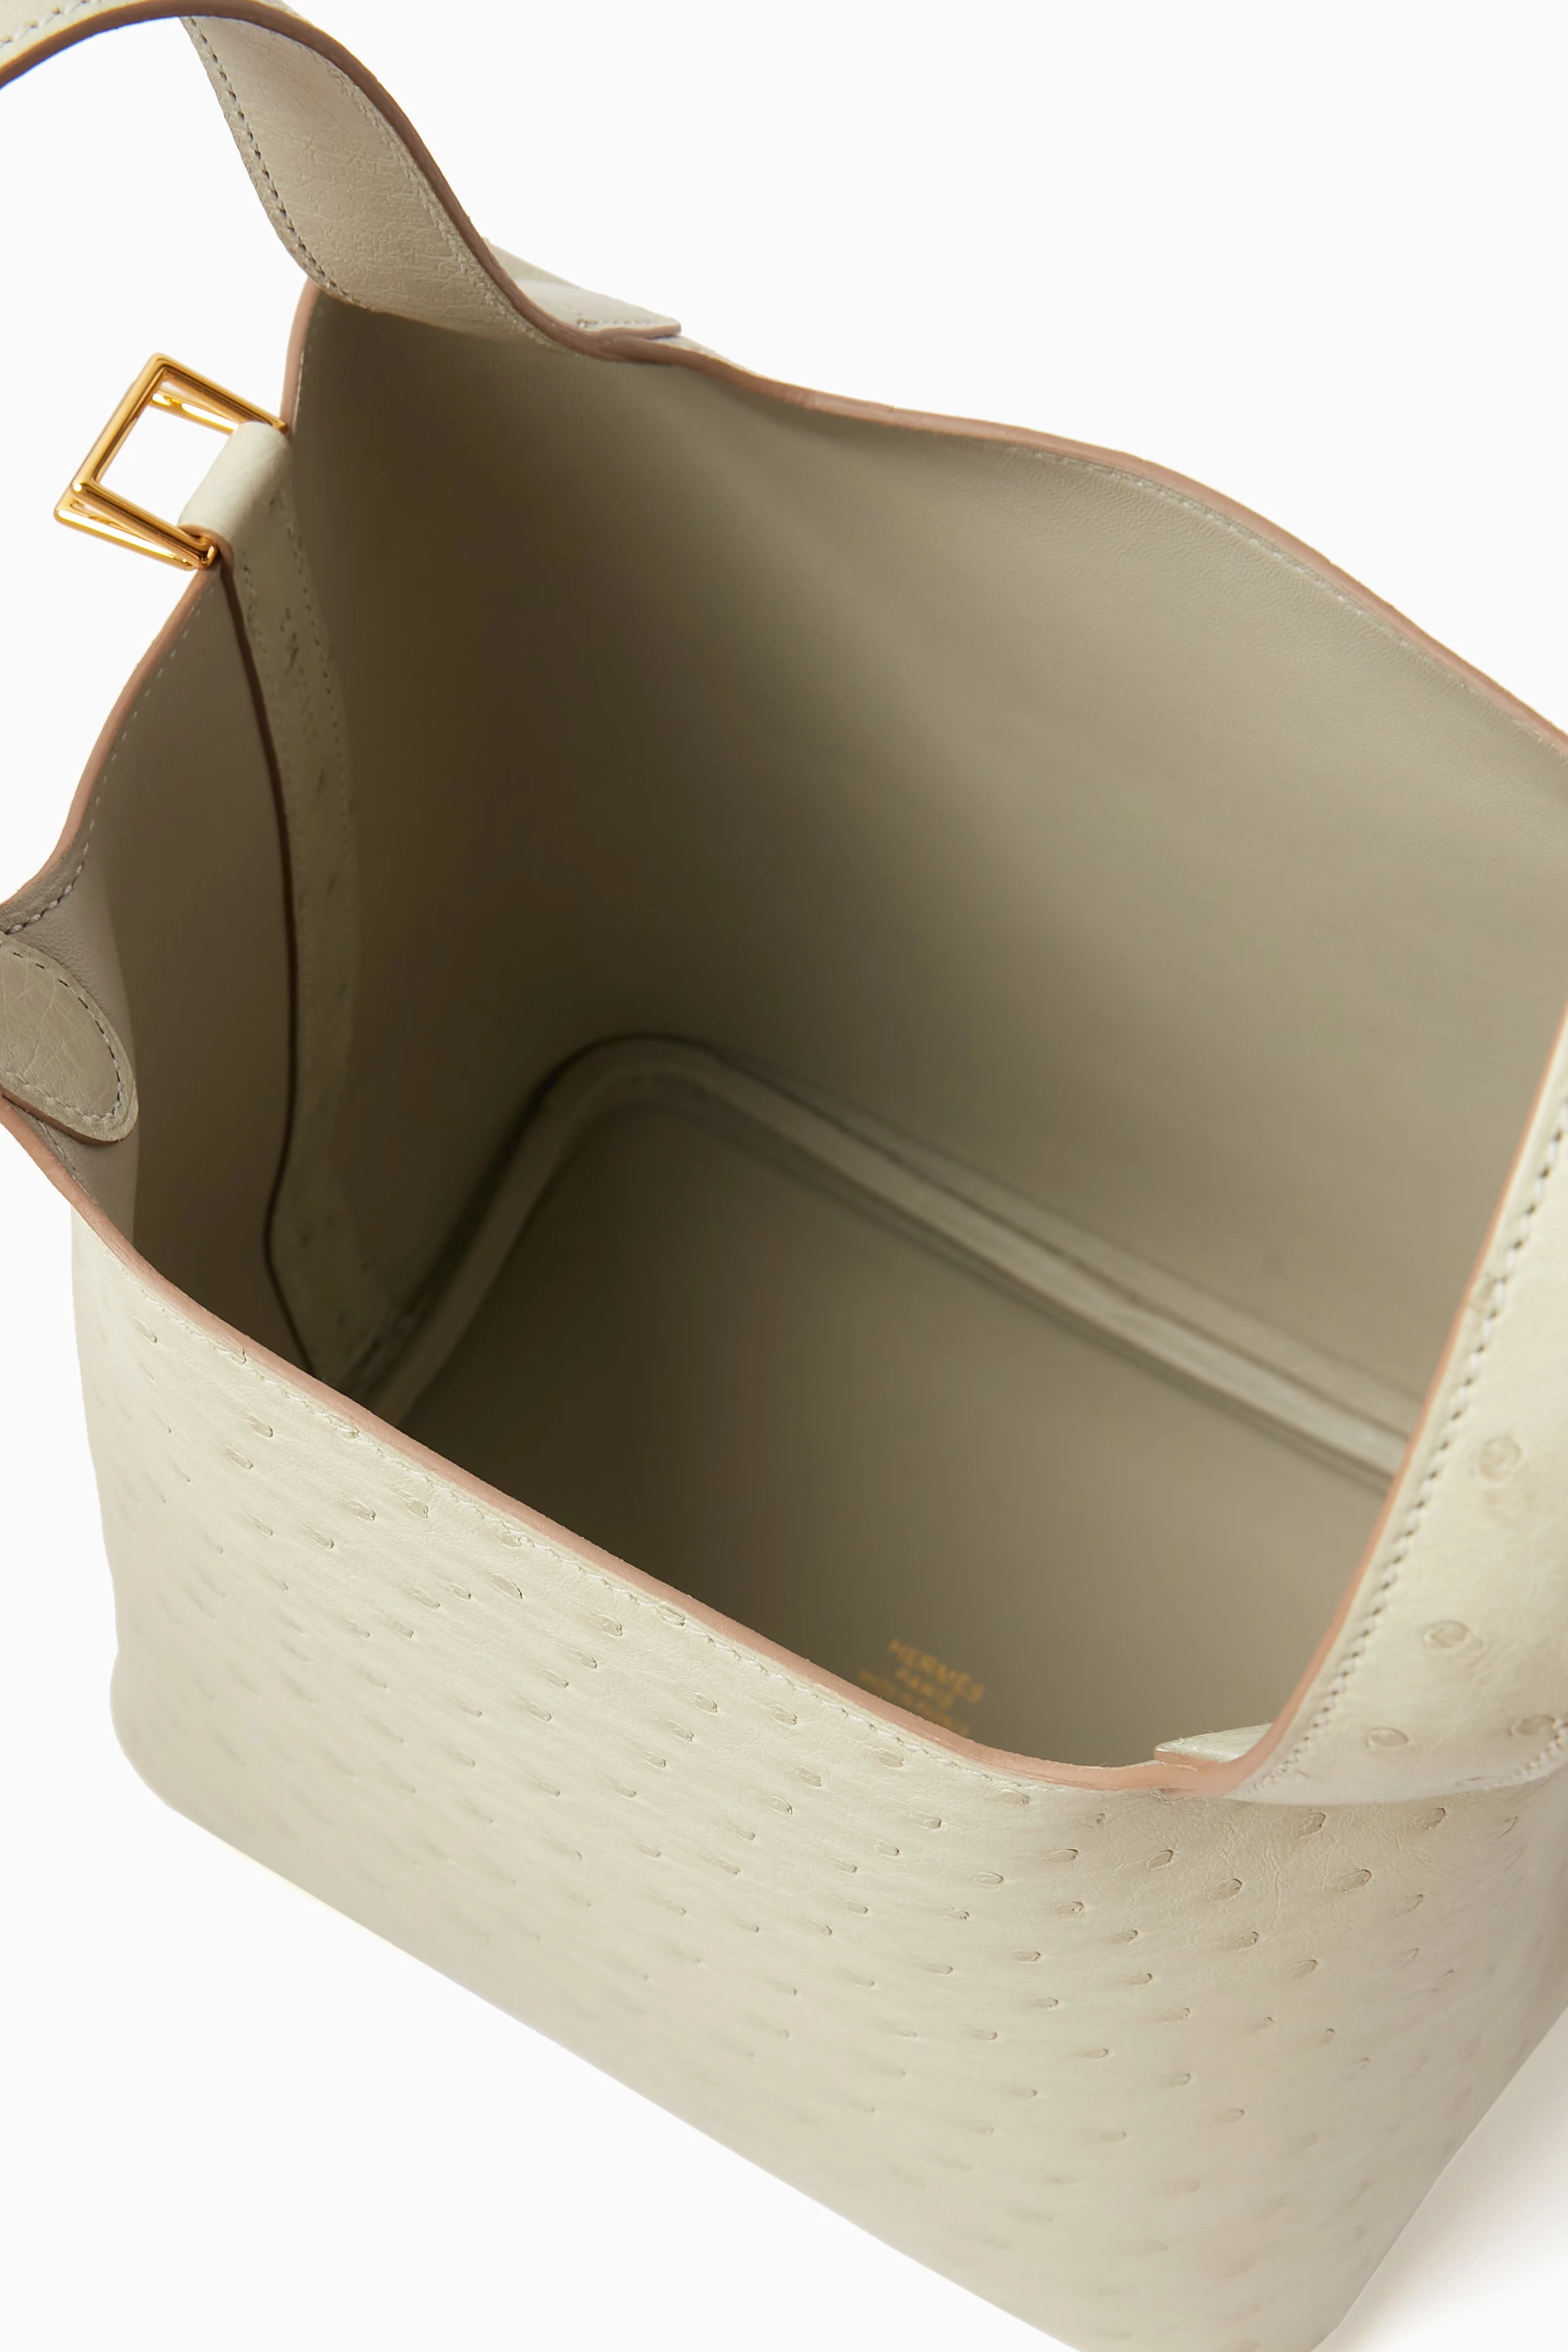 Hermès Picotin Handbag  Buy or Sell your Luxury Handbags - Vestiaire  Collective